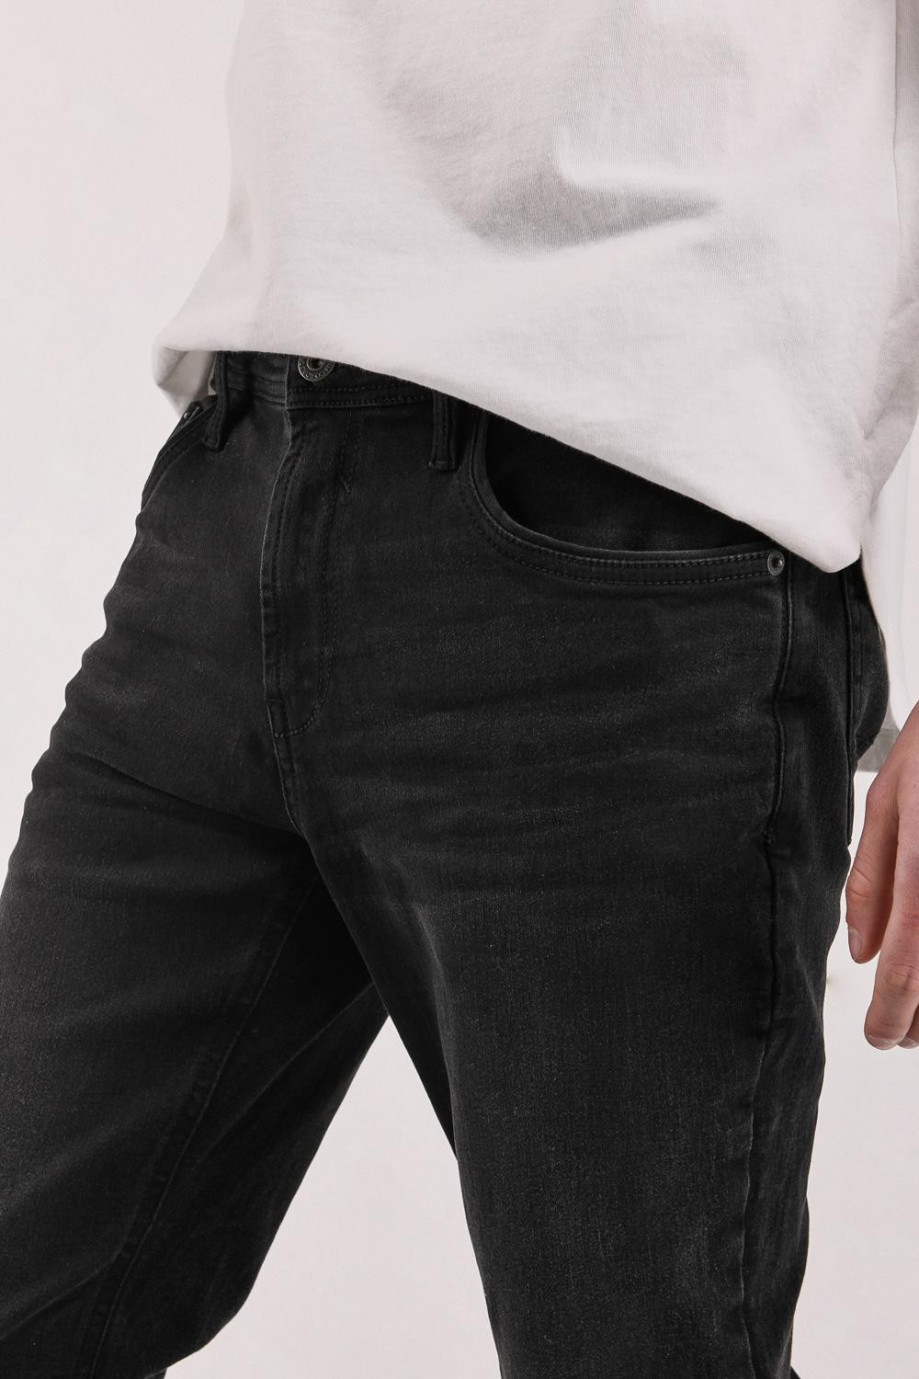 Jean skinny tiro bajo negro con botón metálico en la cintura